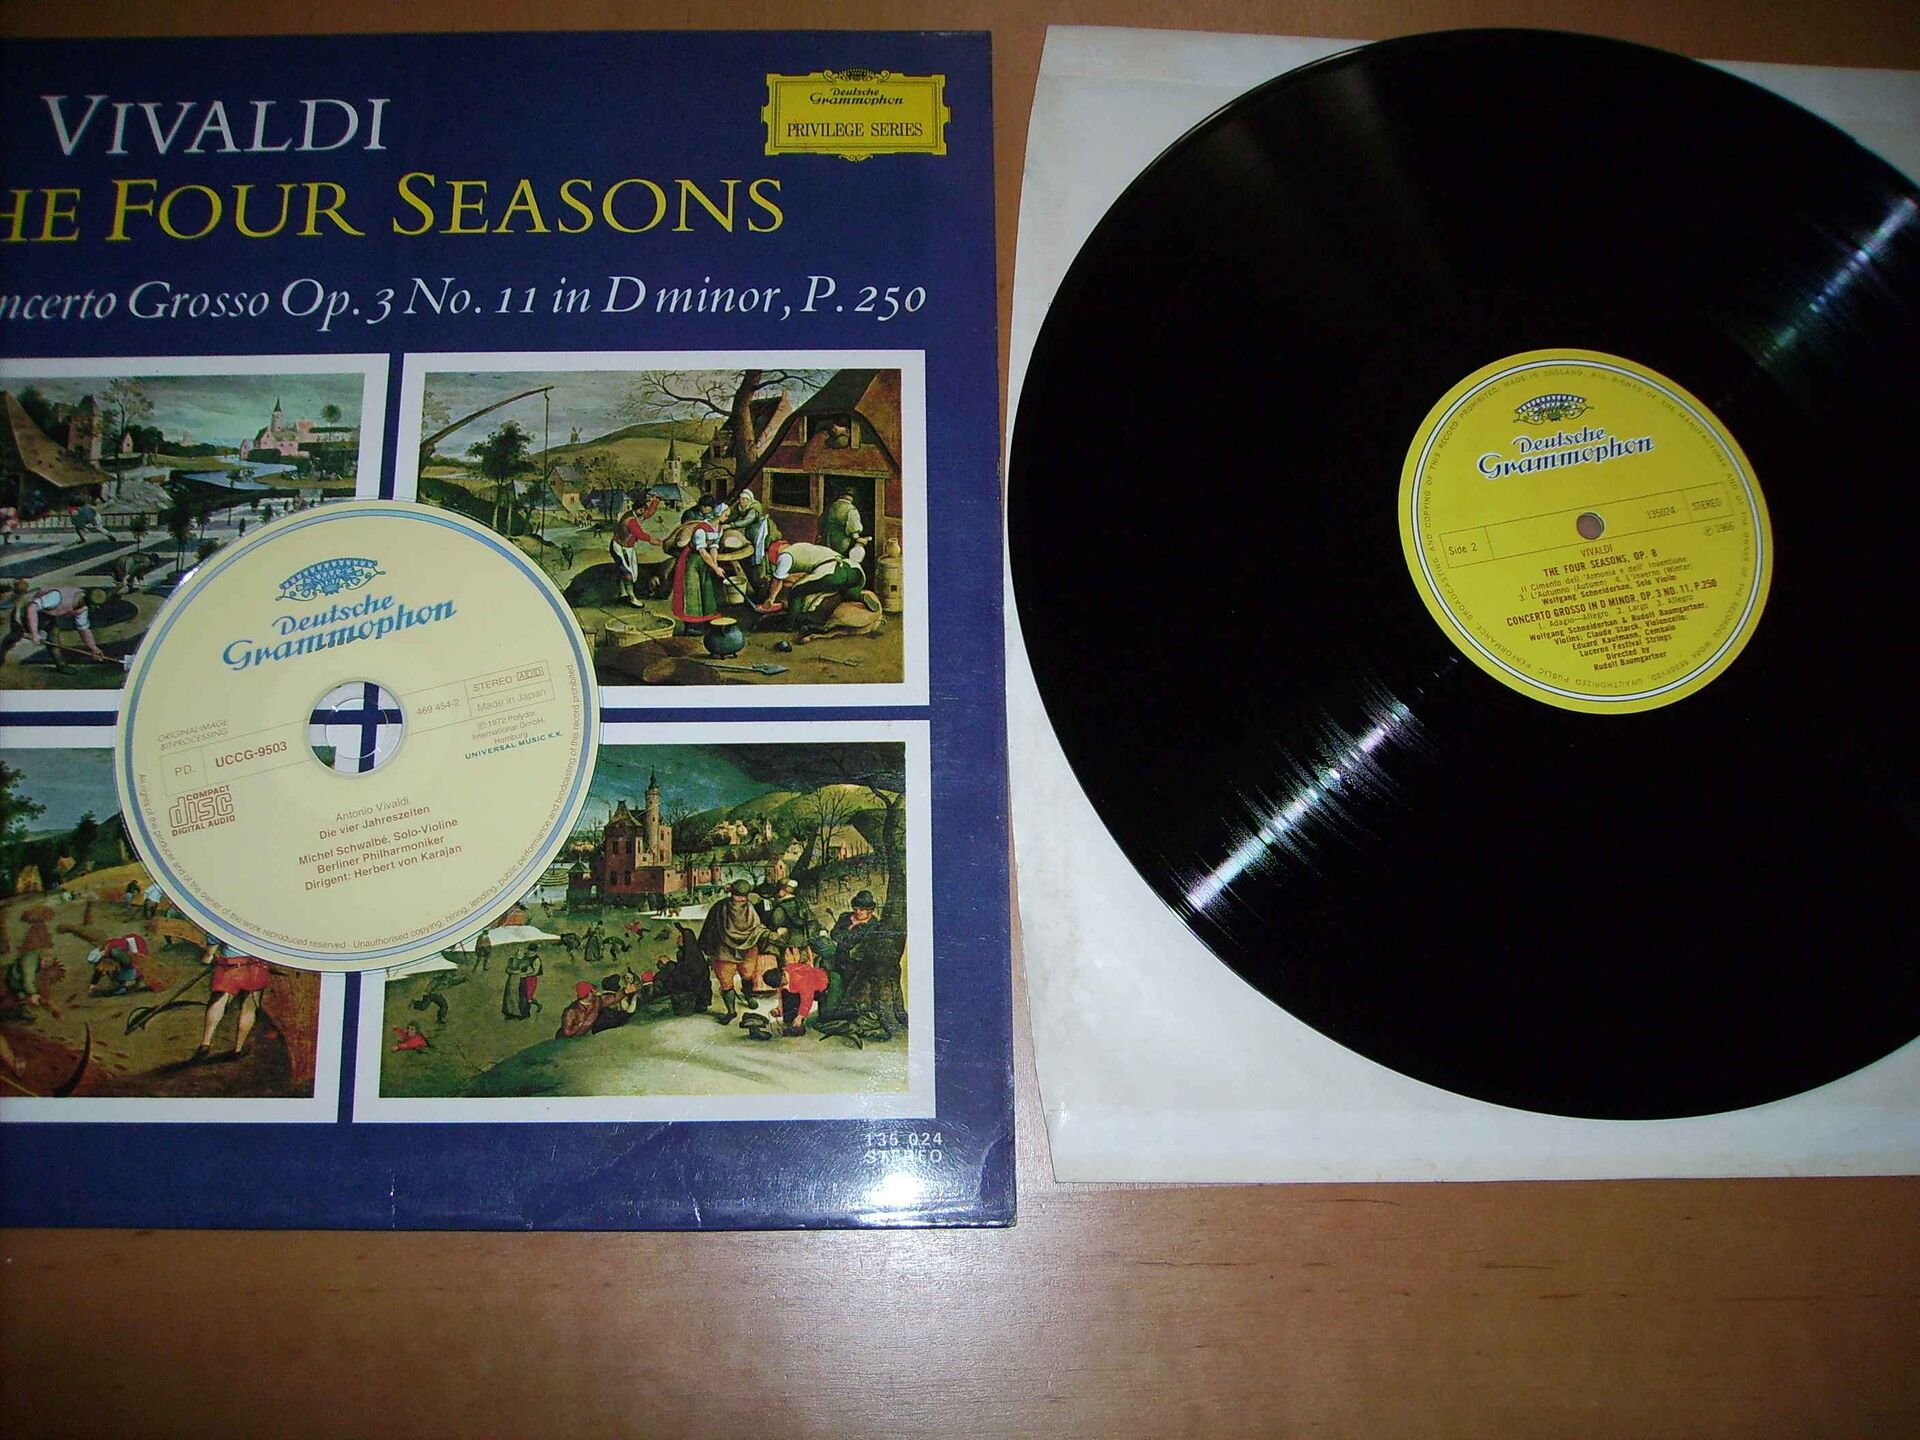 Vivaldi пластинка и CD.JPG